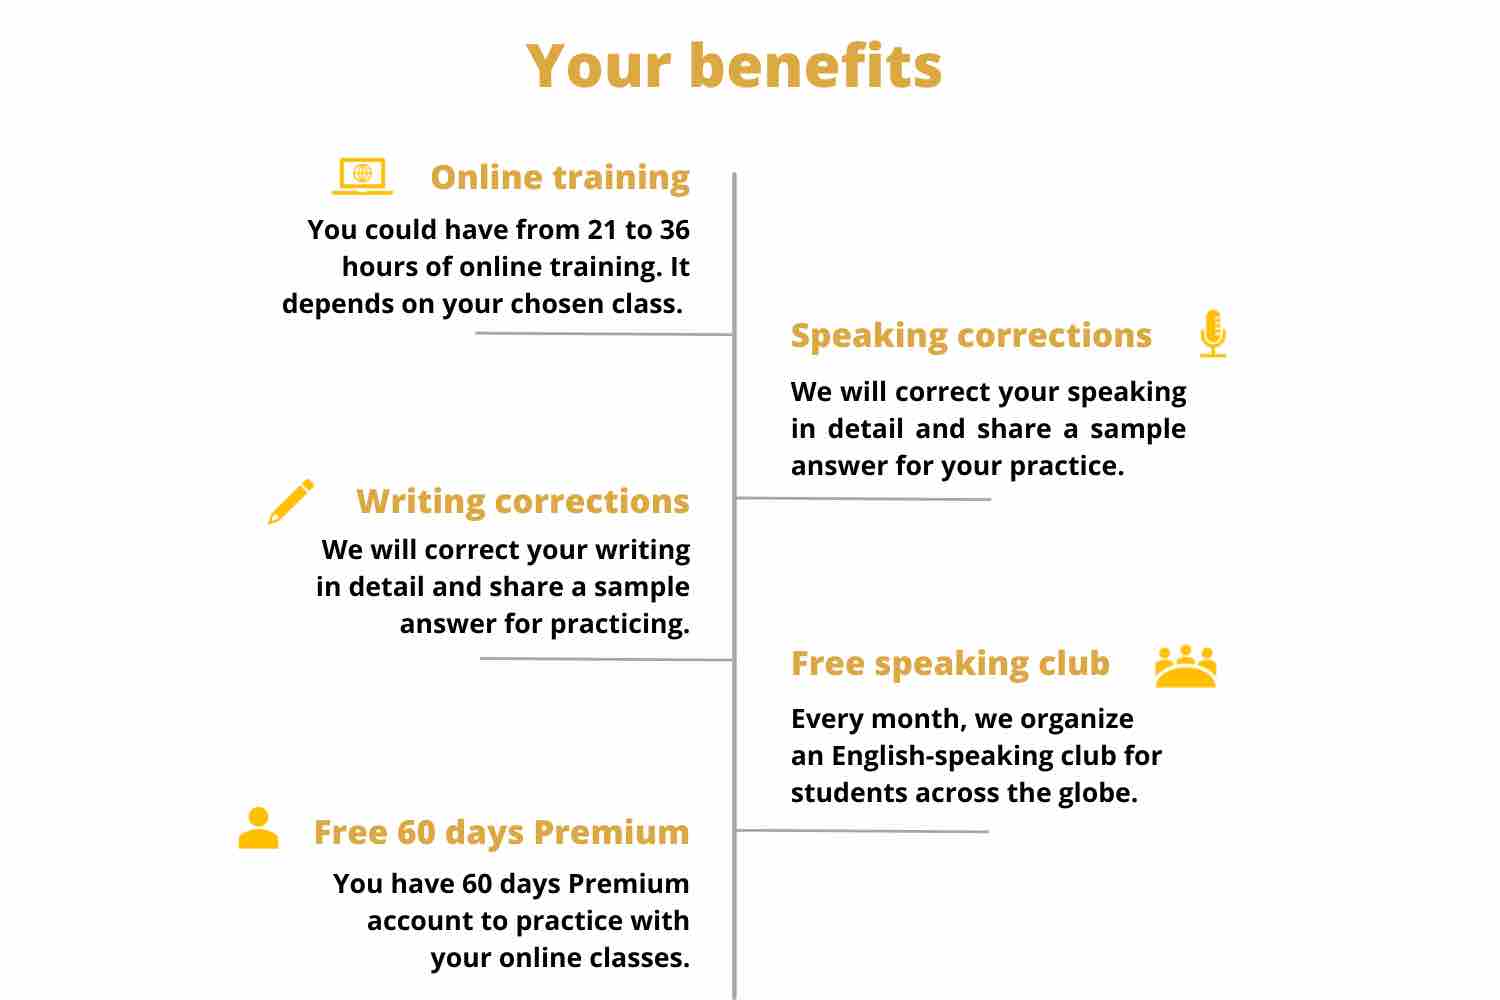 duolingo training benefits, det practice platform, Duolingo Test preparation